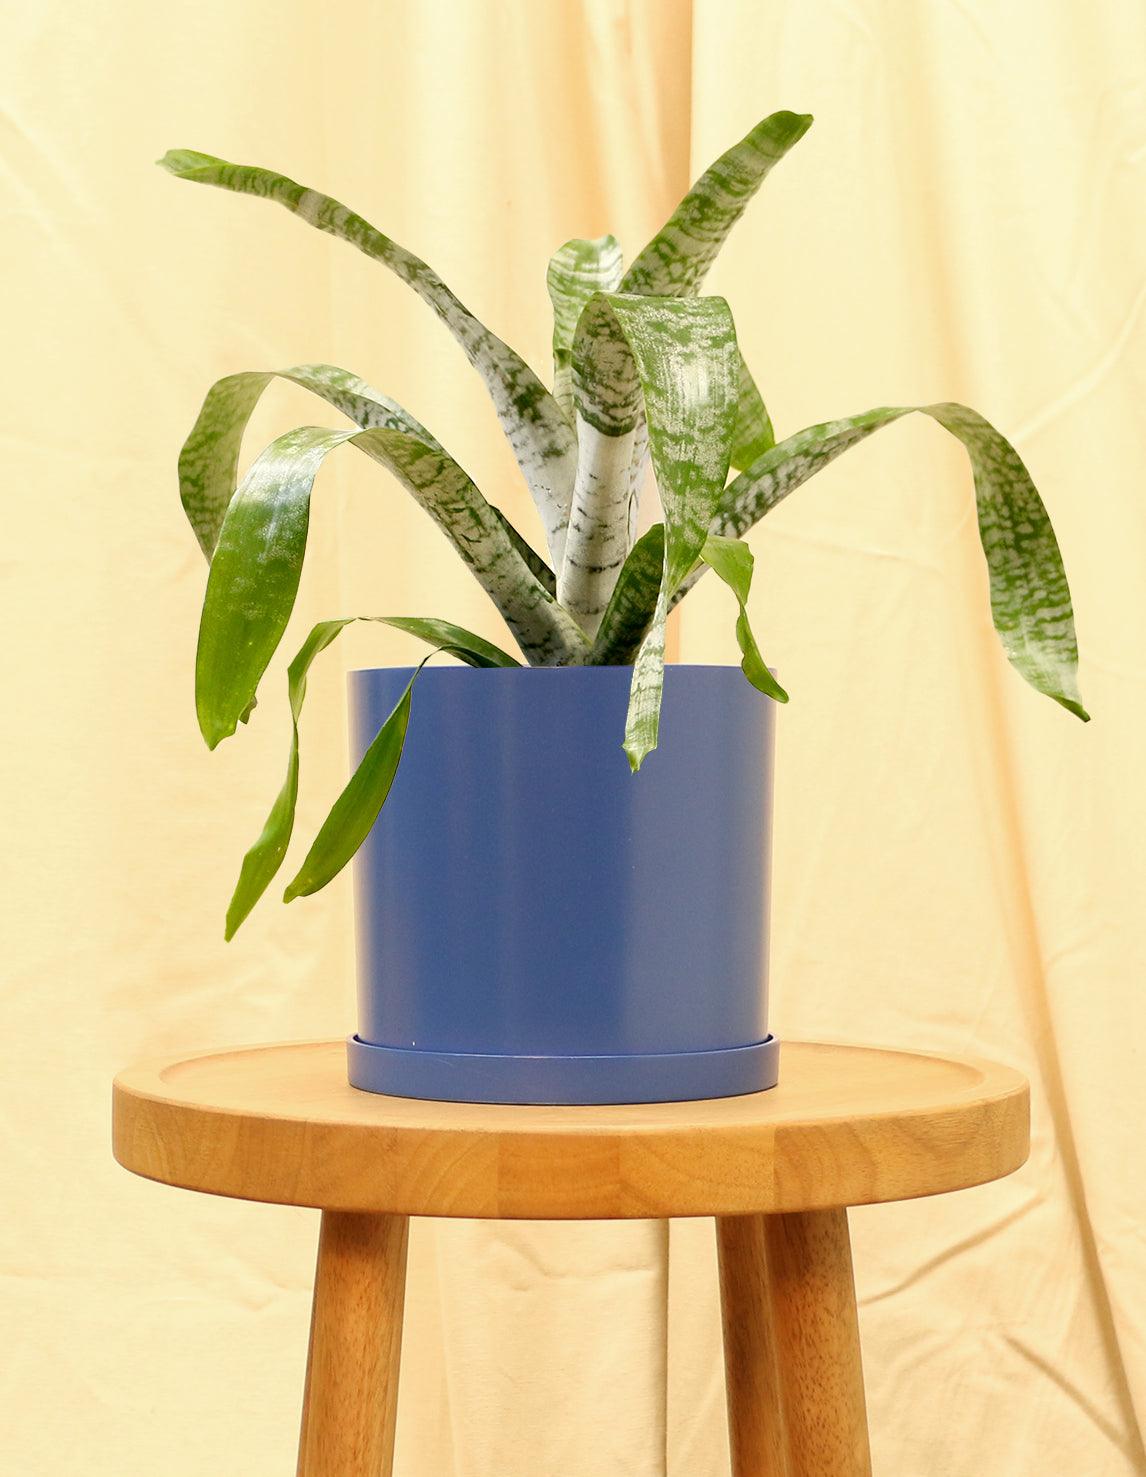 Medium Urn Plant in blue pot.